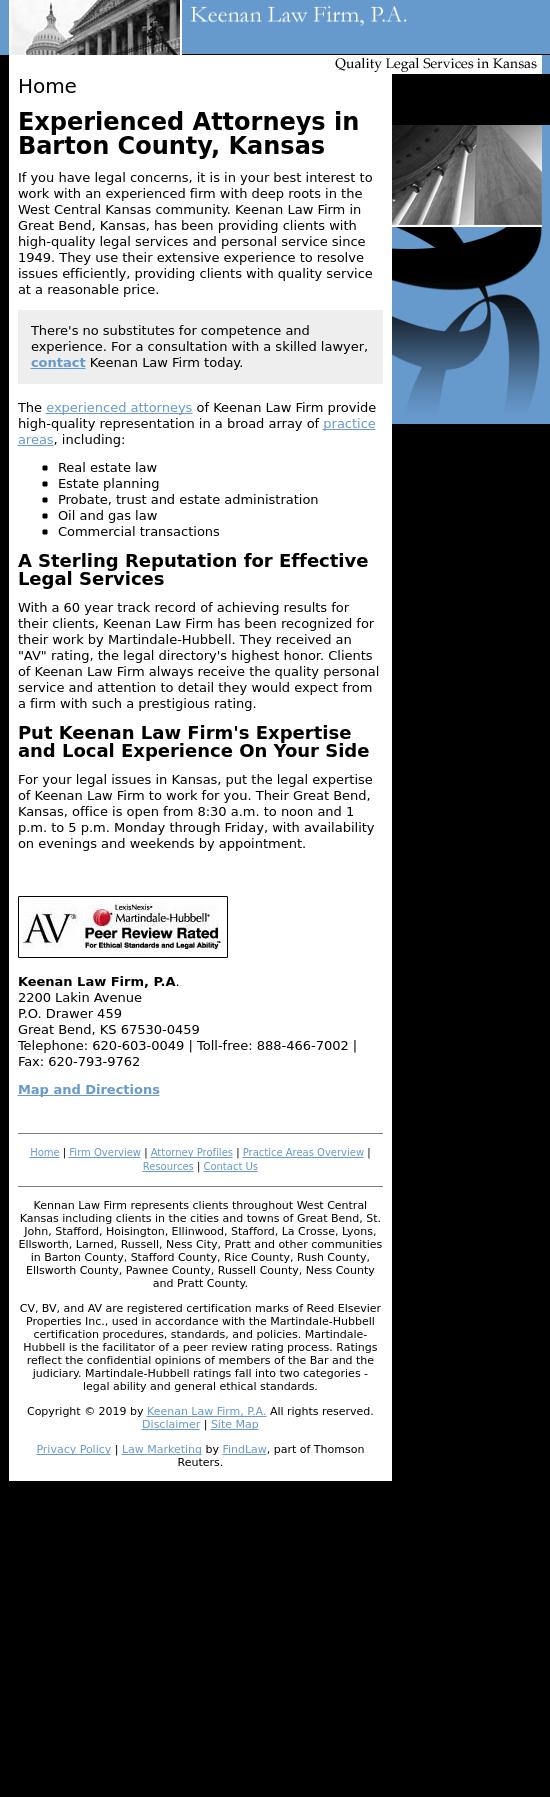 Keenan Law Firm, P.A. - Great Bend KS Lawyers